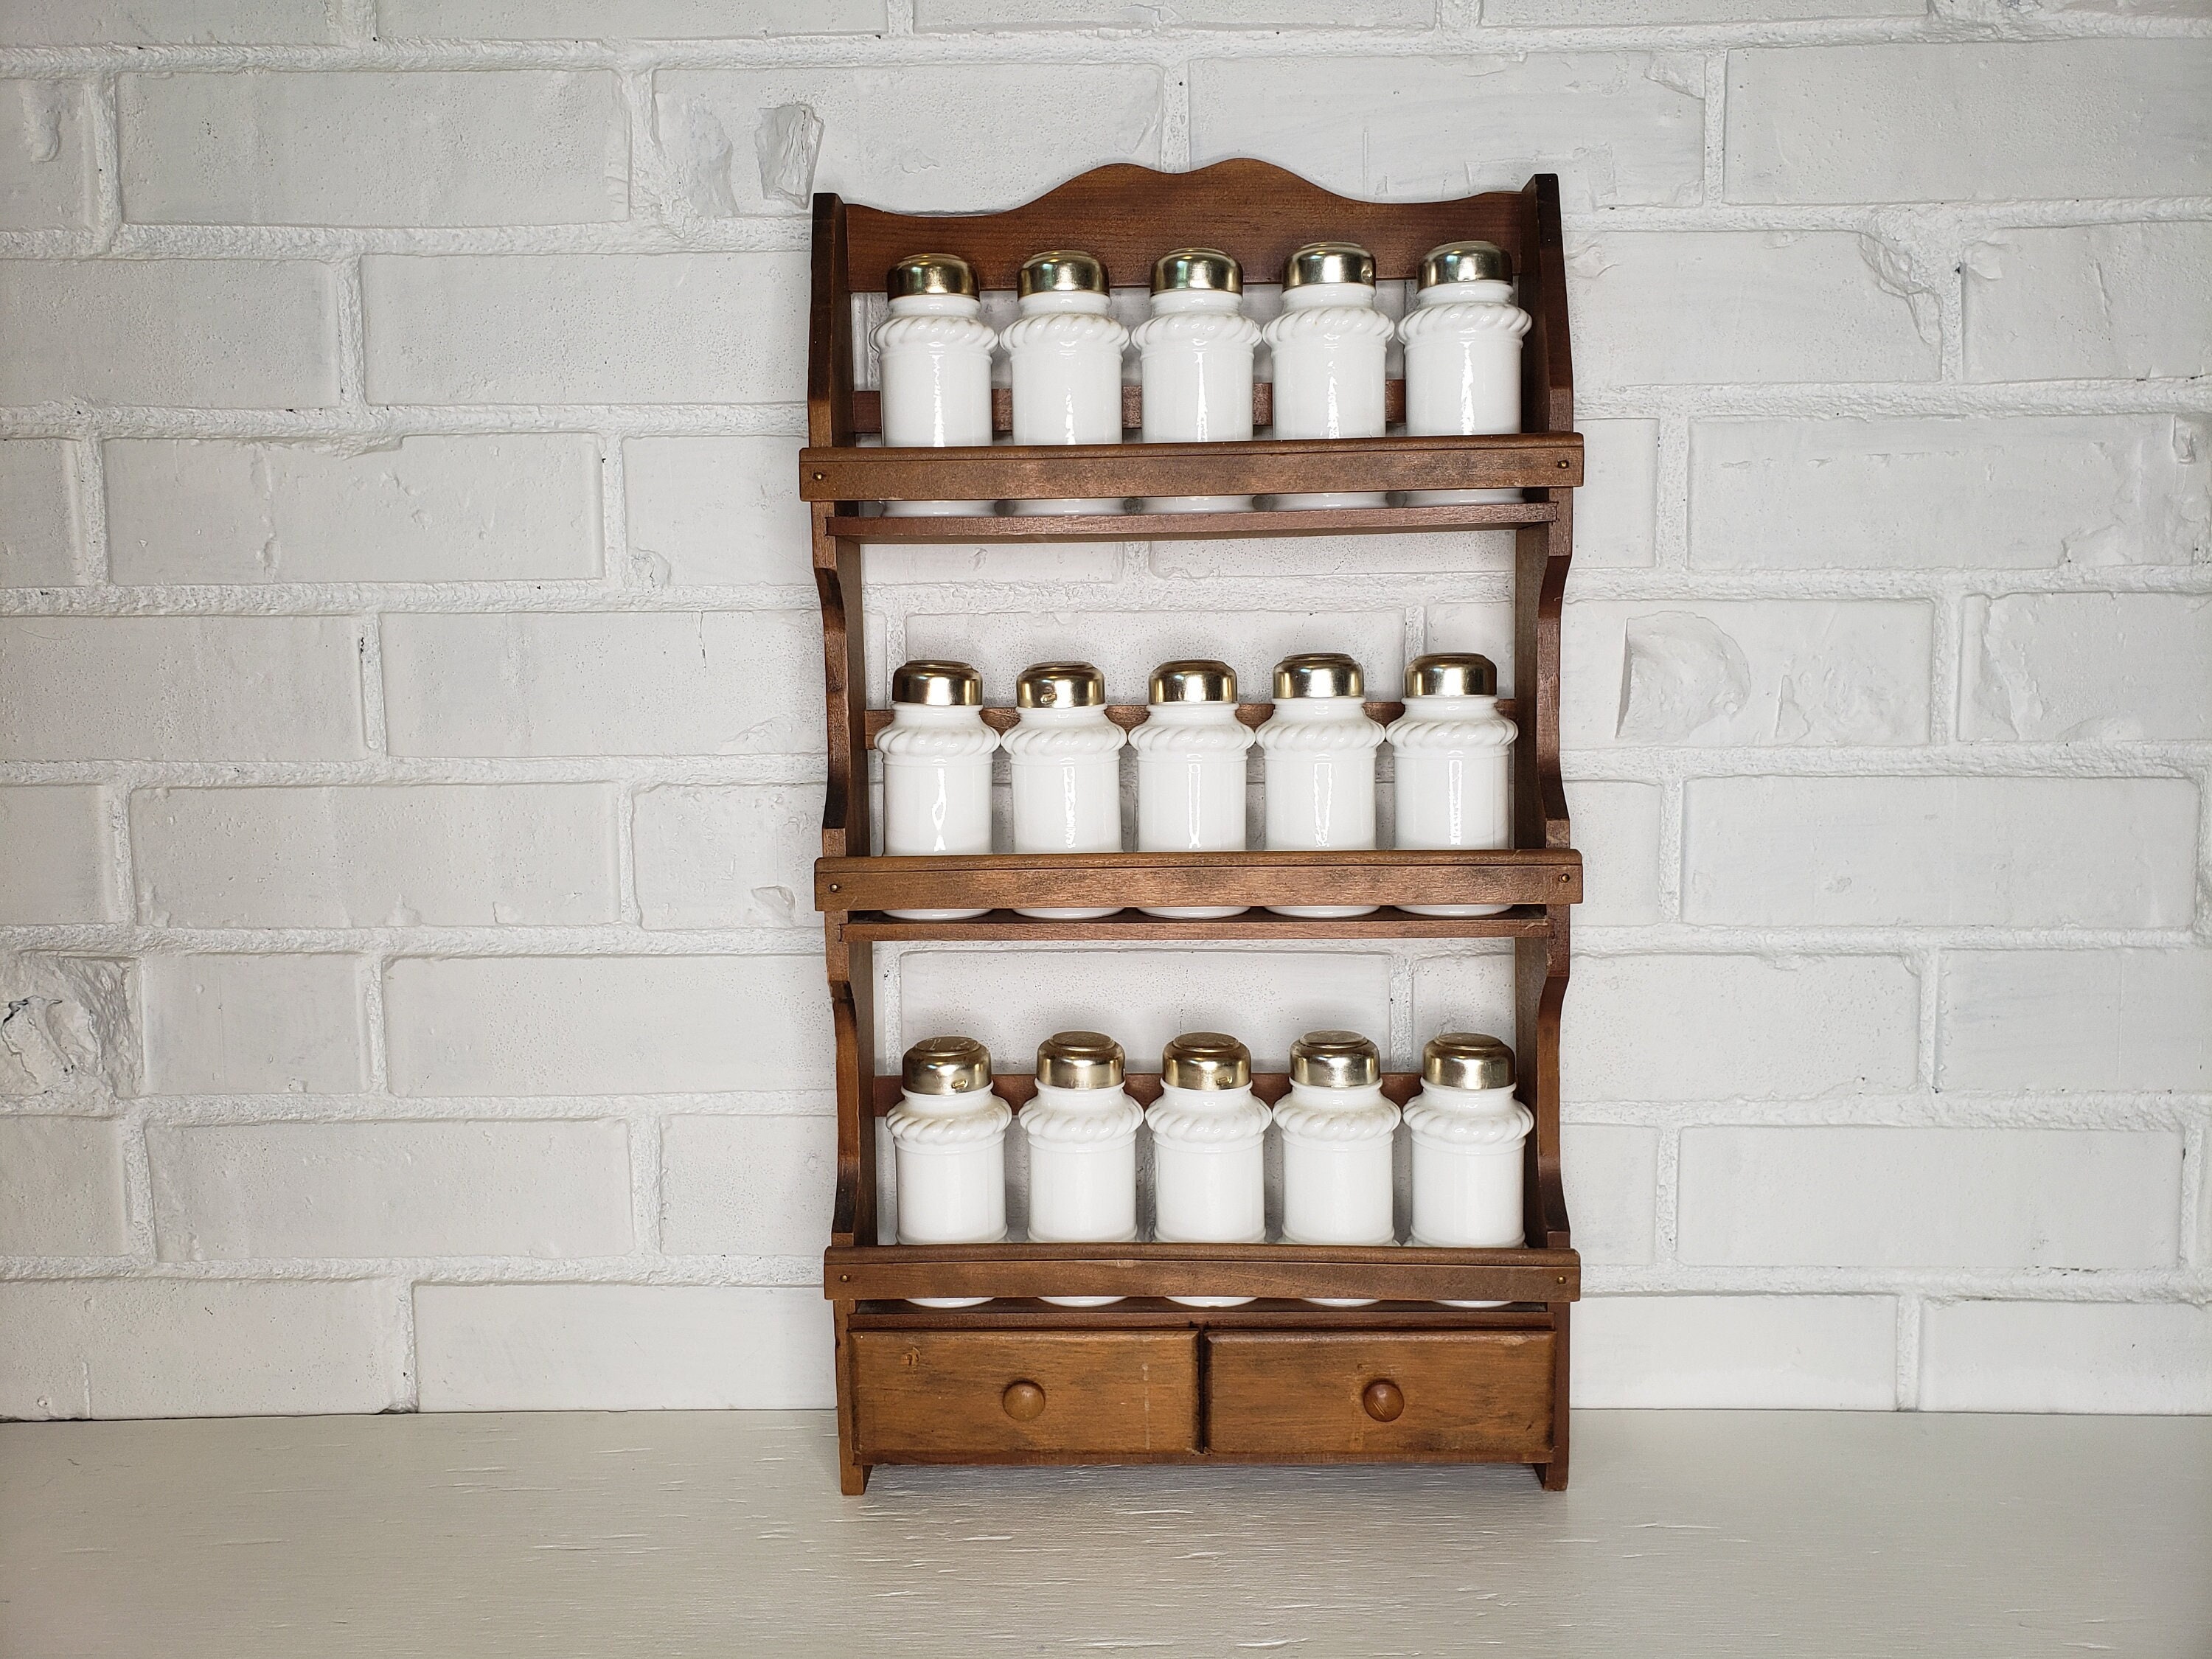 Rustic Spice Rack with Custom Labeled Jars -  España